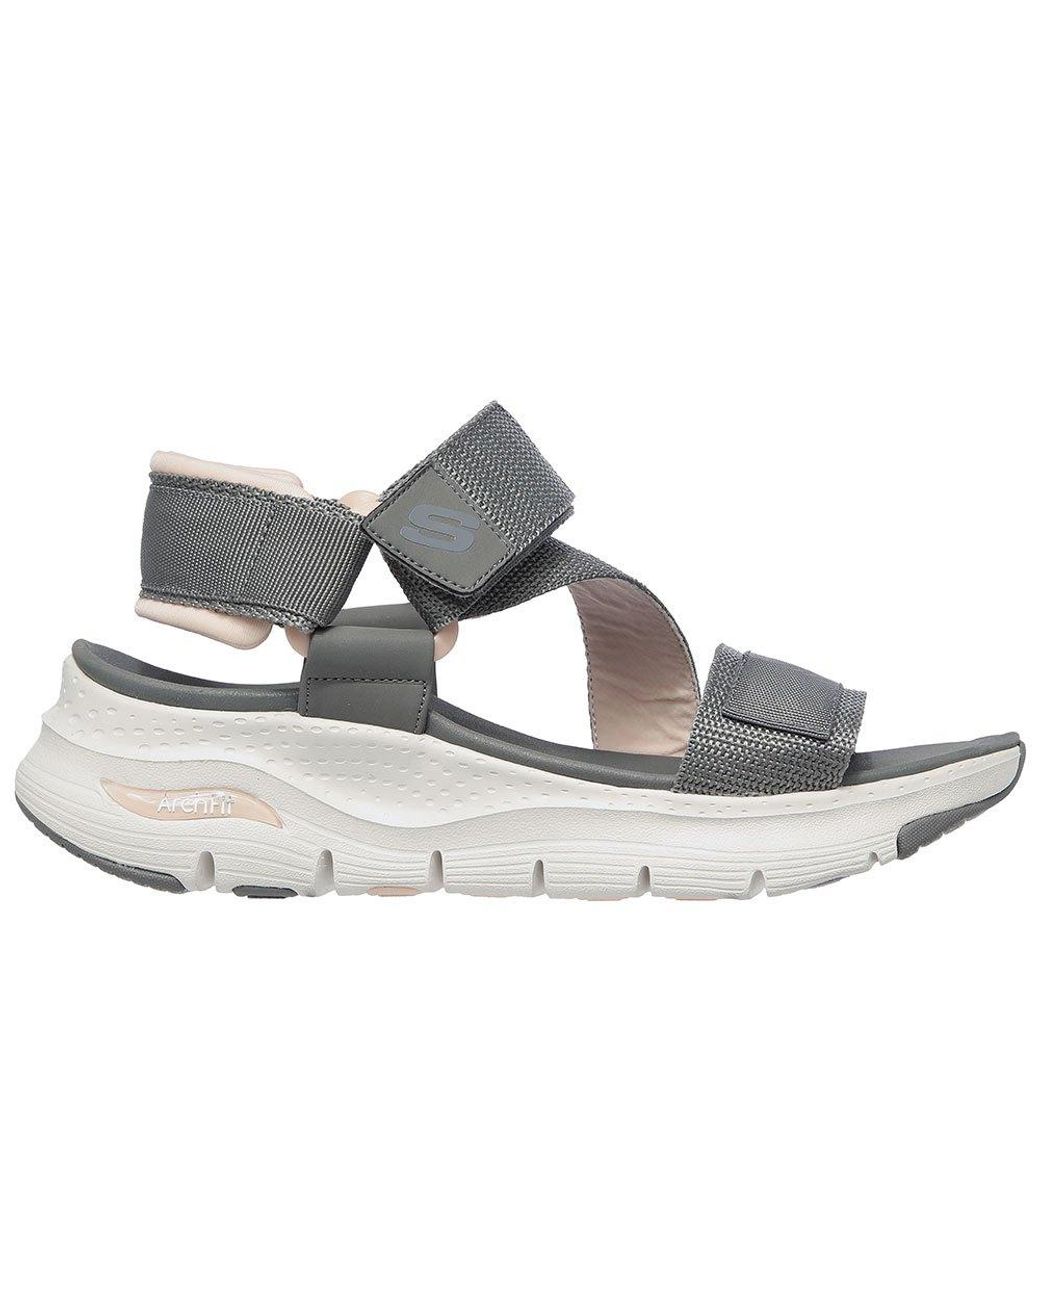 Skechers Arch Fit - Pop Retro Sandals in Gray | Lyst